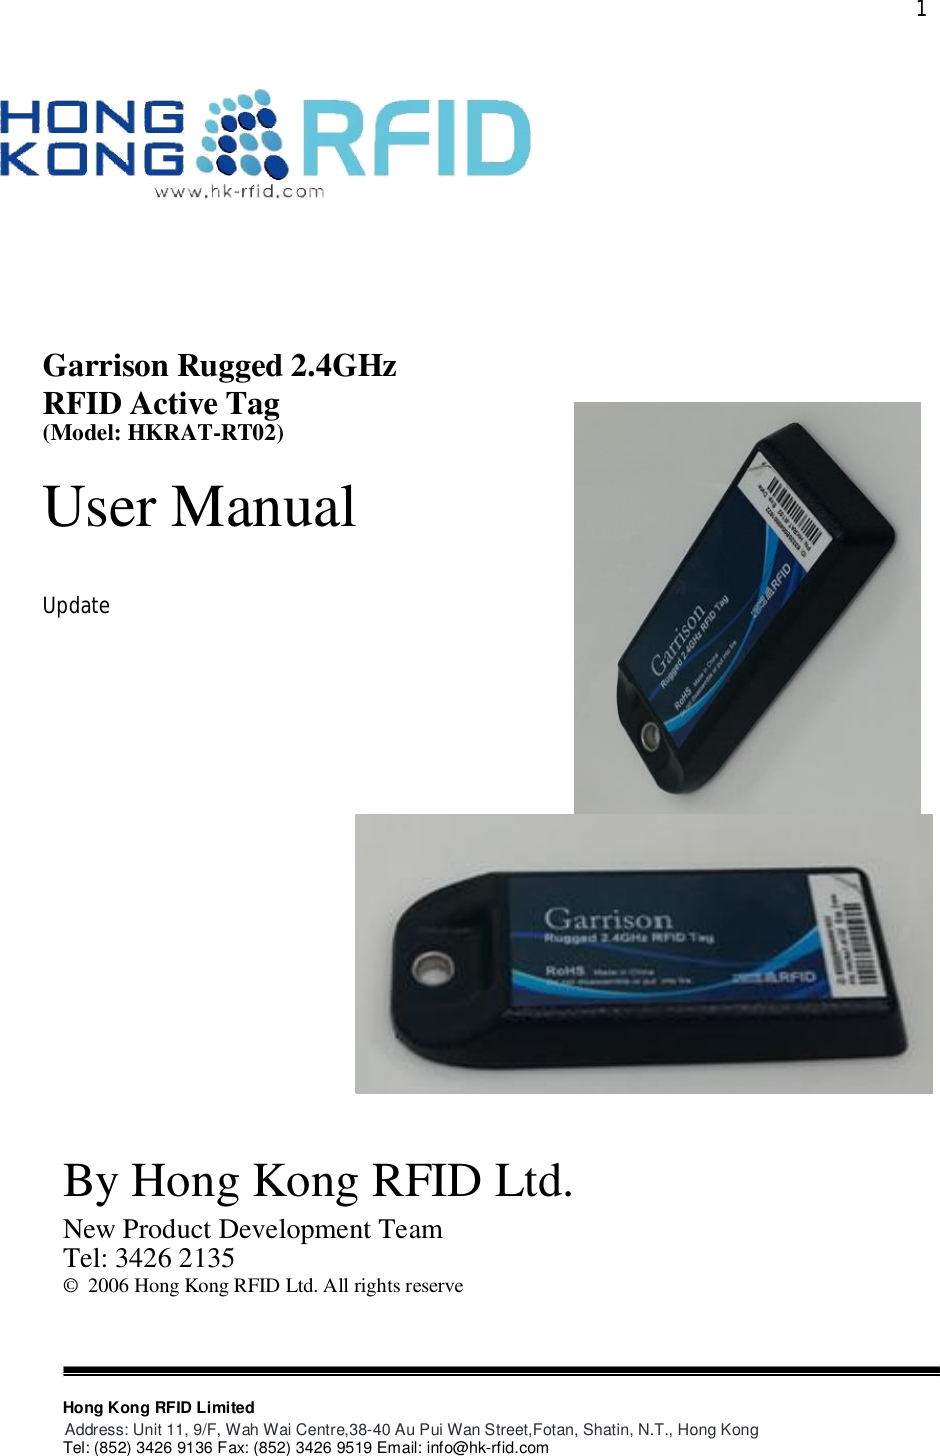  1Hong Kong RFID LimitedAddress: Unit 11, 9/F, Wah Wai Centre,38-40 Au Pui Wan Street,Fotan, Shatin, N.T., Hong KongTel: (852) 3426 9136 Fax: (852) 3426 9519 Email: info@hk-rfid.comBy Hong Kong RFID Ltd.New Product Development TeamTel: 3426 2135©  2006 Hong Kong RFID Ltd. All rights reserveGarrison Rugged 2.4GHzRFID Active Tag(Model: HKRAT-RT02)User ManualUpdate